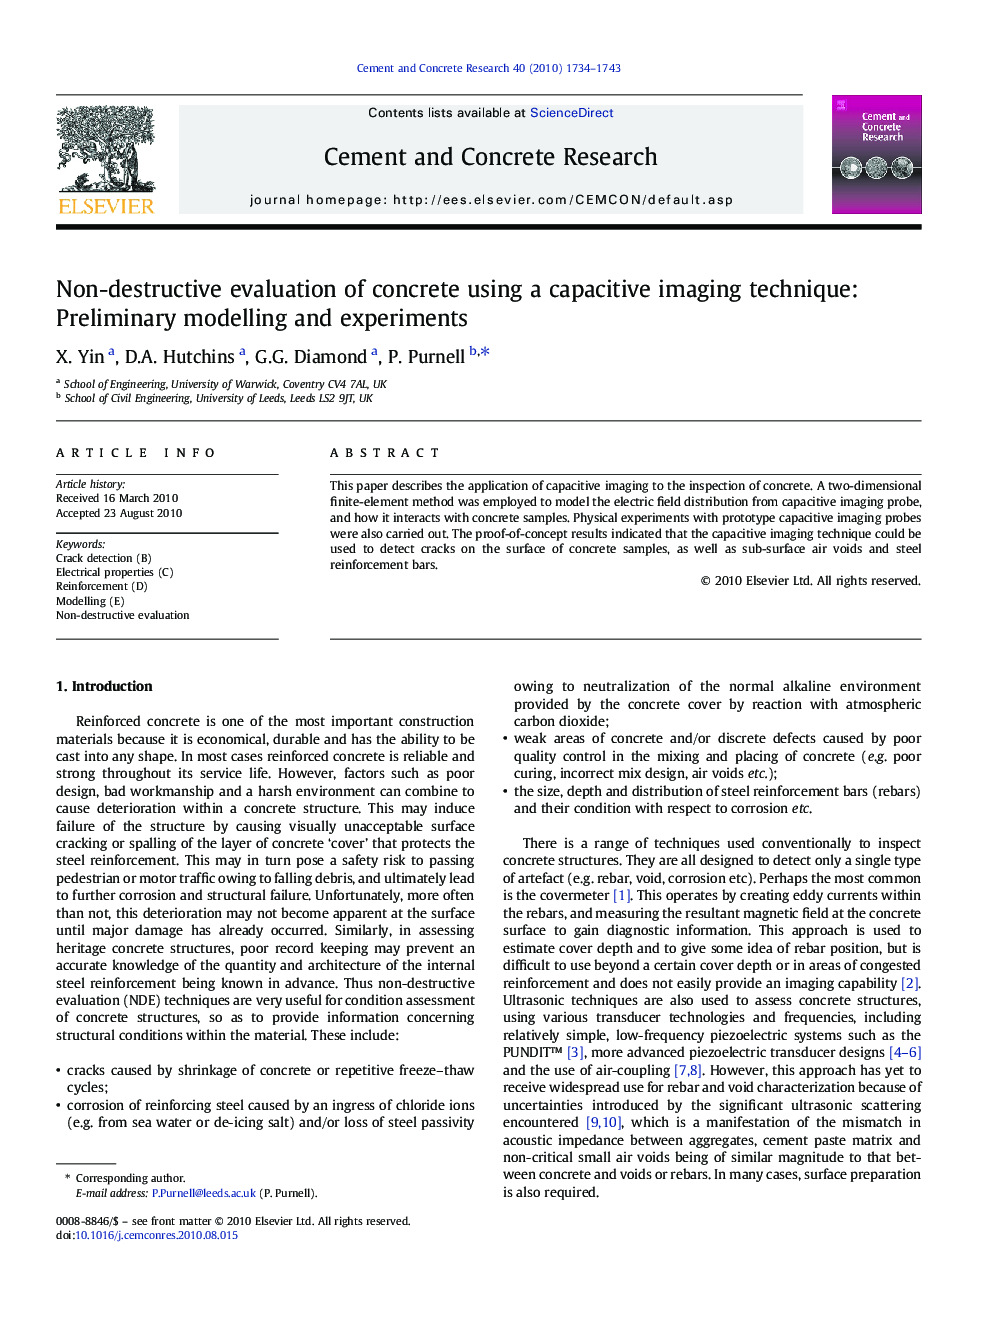 Non-destructive evaluation of concrete using a capacitive imaging technique: Preliminary modelling and experiments